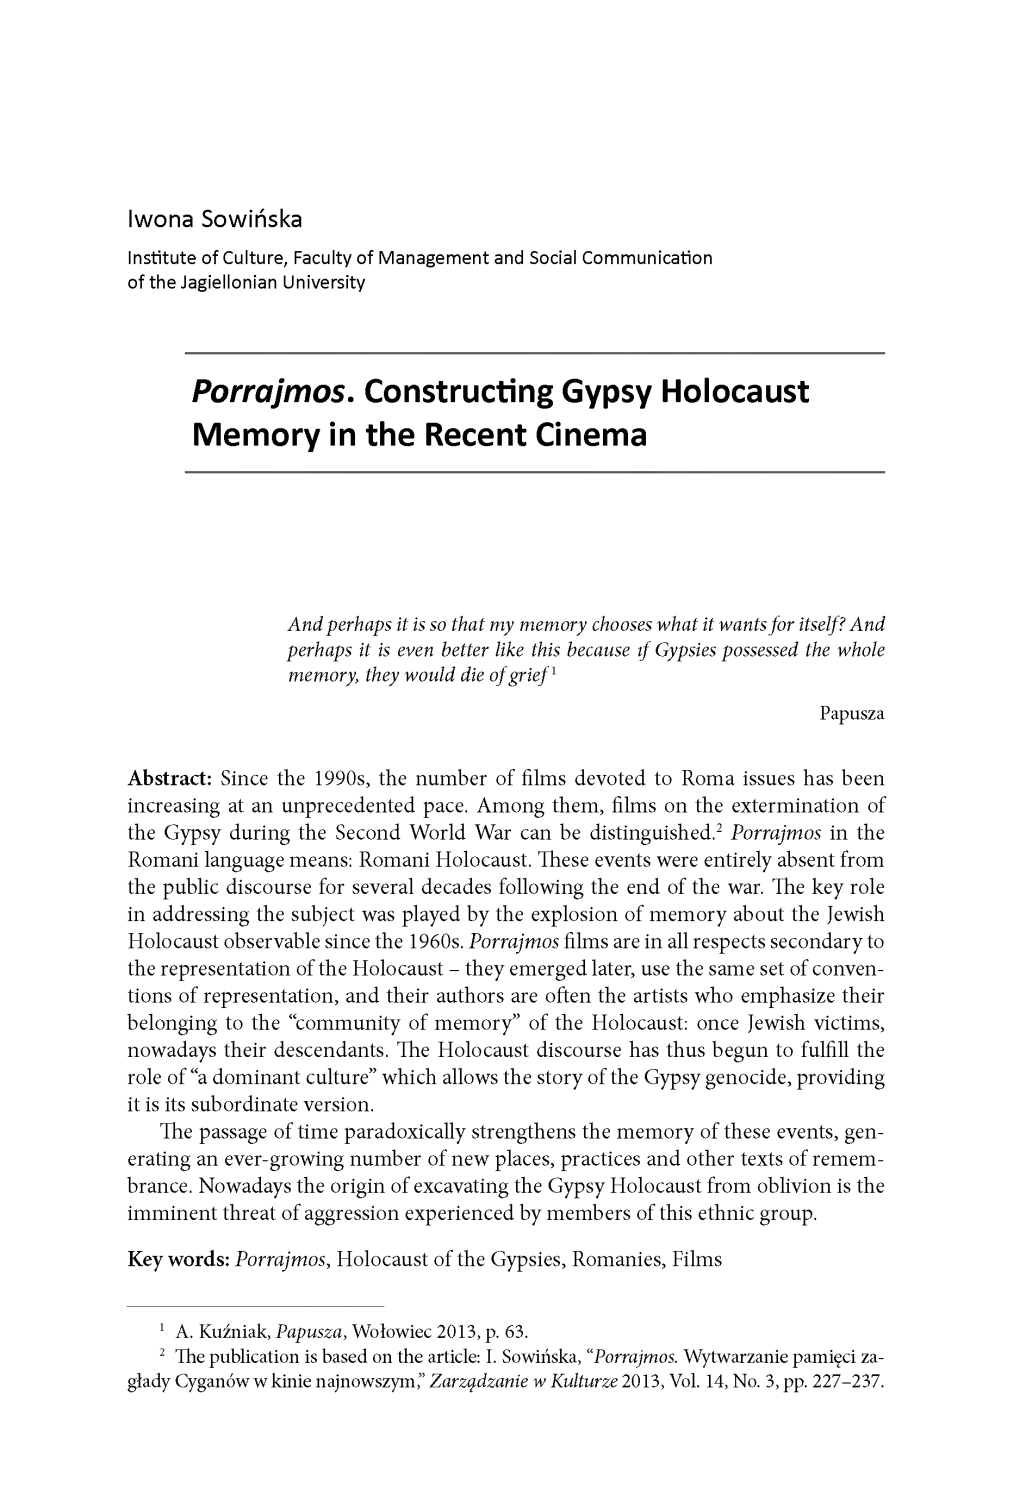 Porrajmos. Constructing Gypsy Holocaust Memory in the Recent Cinema